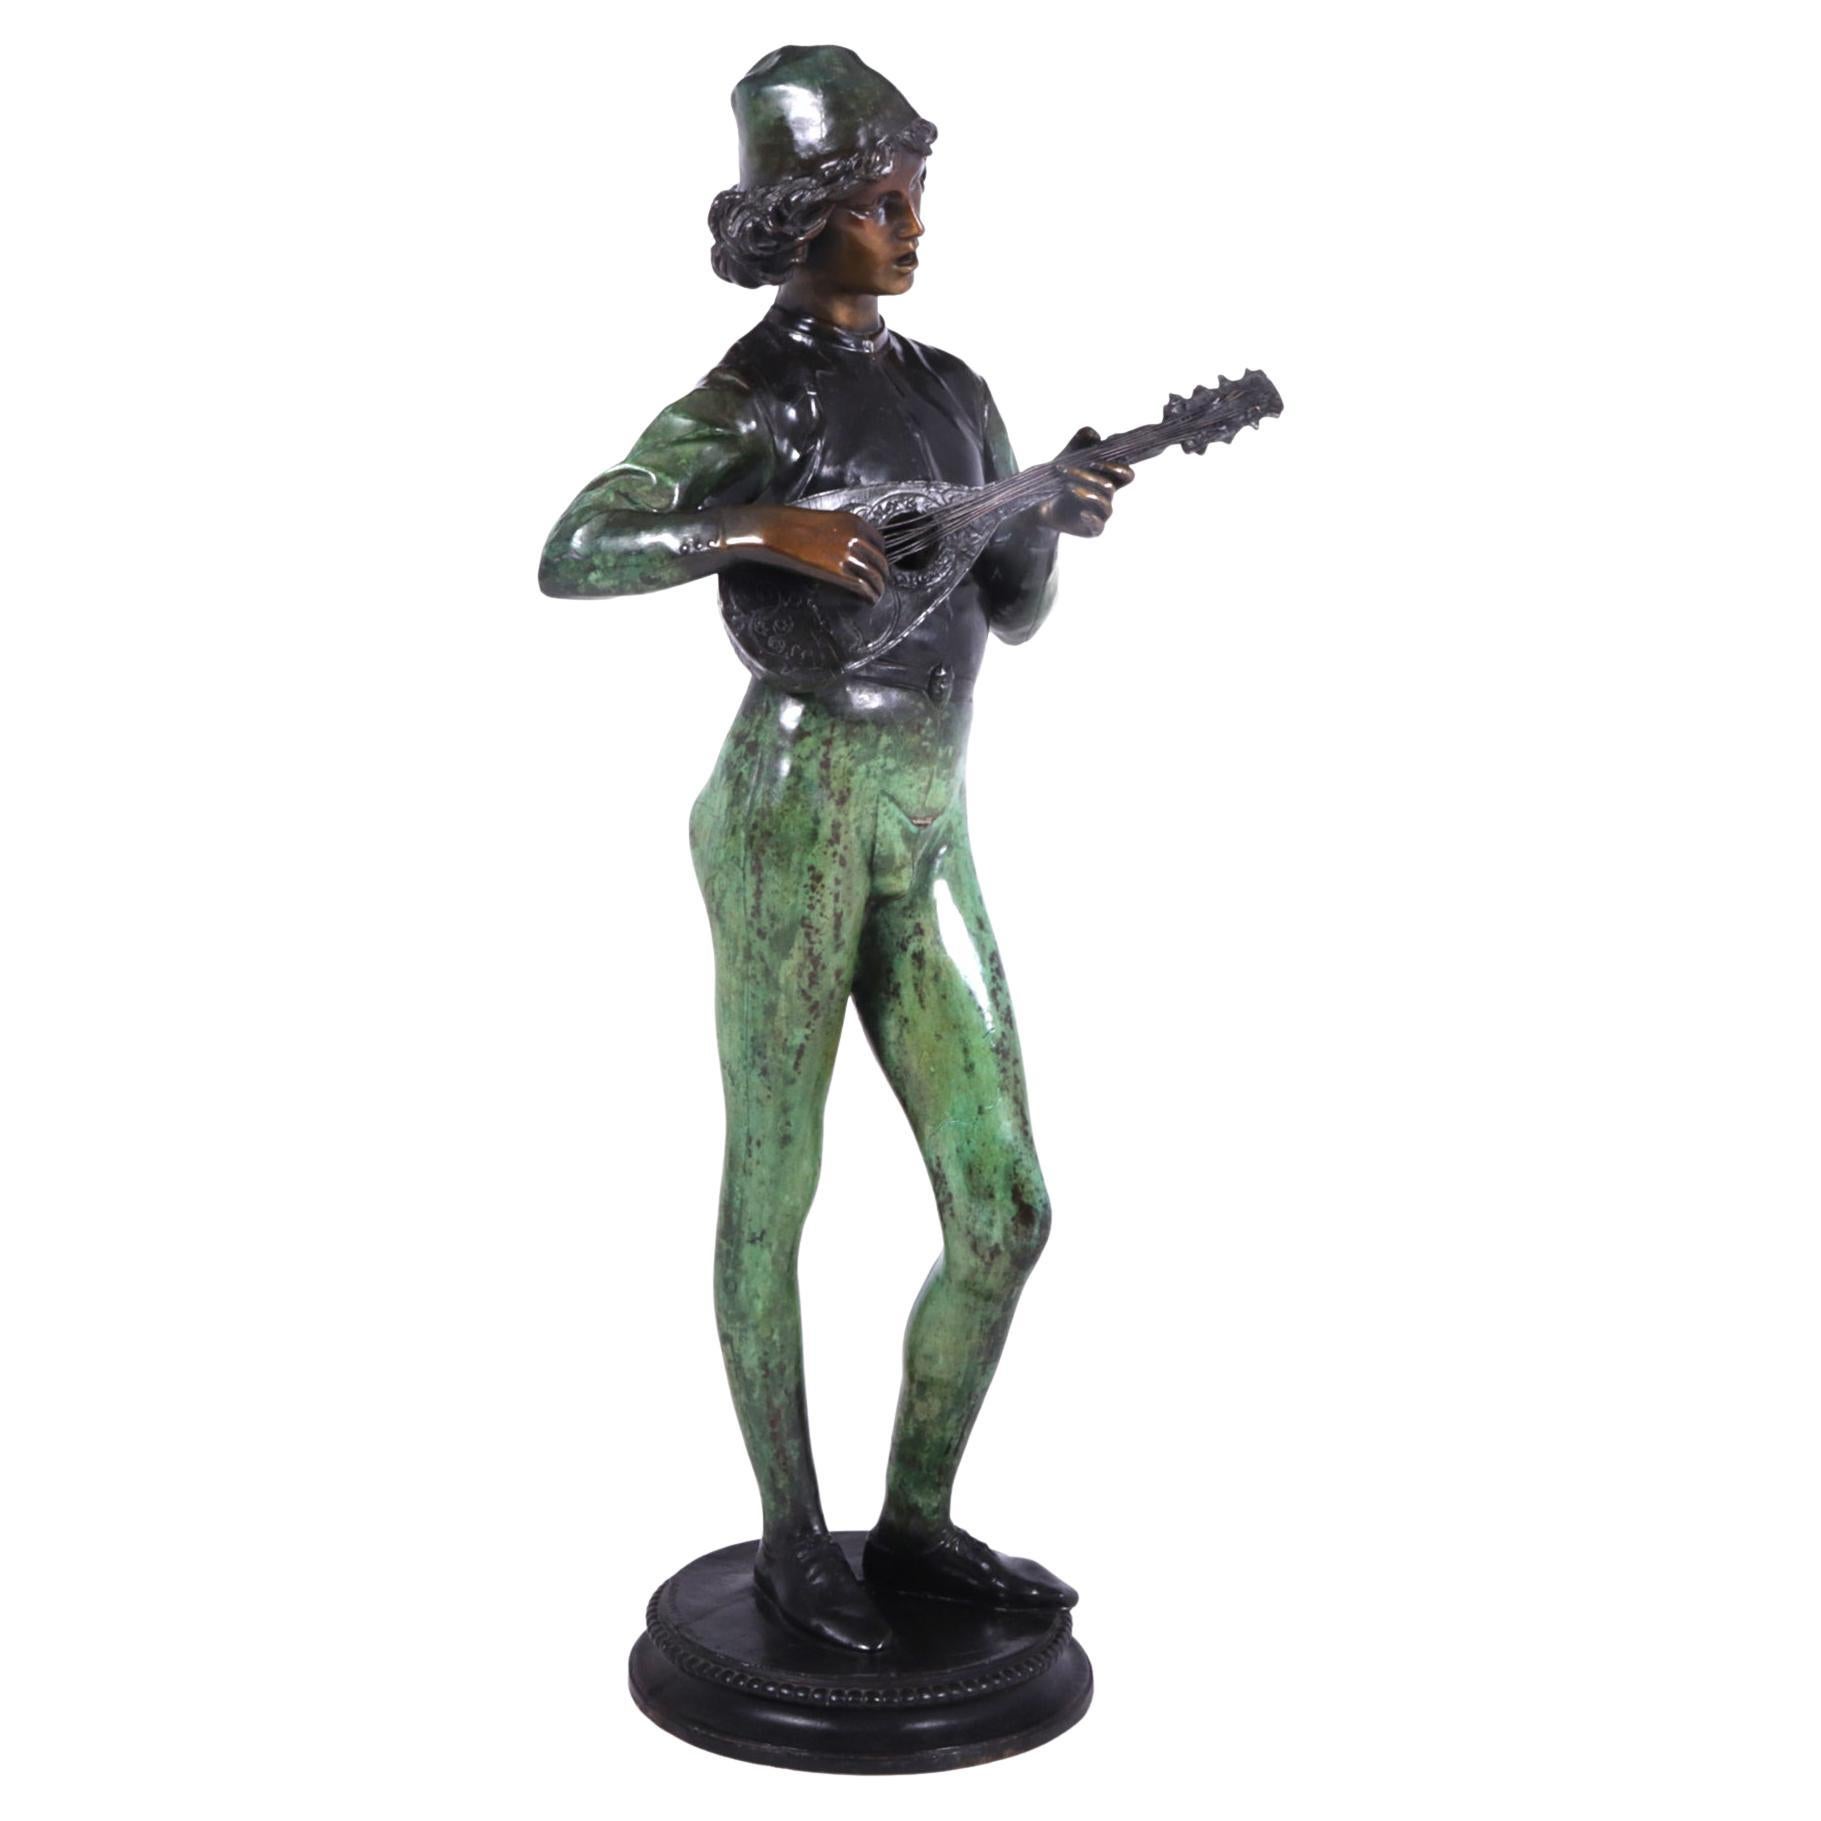 Antique Bronze Sculpture ‘Standing Music Man’ by Barbedienne Fondeur c1880